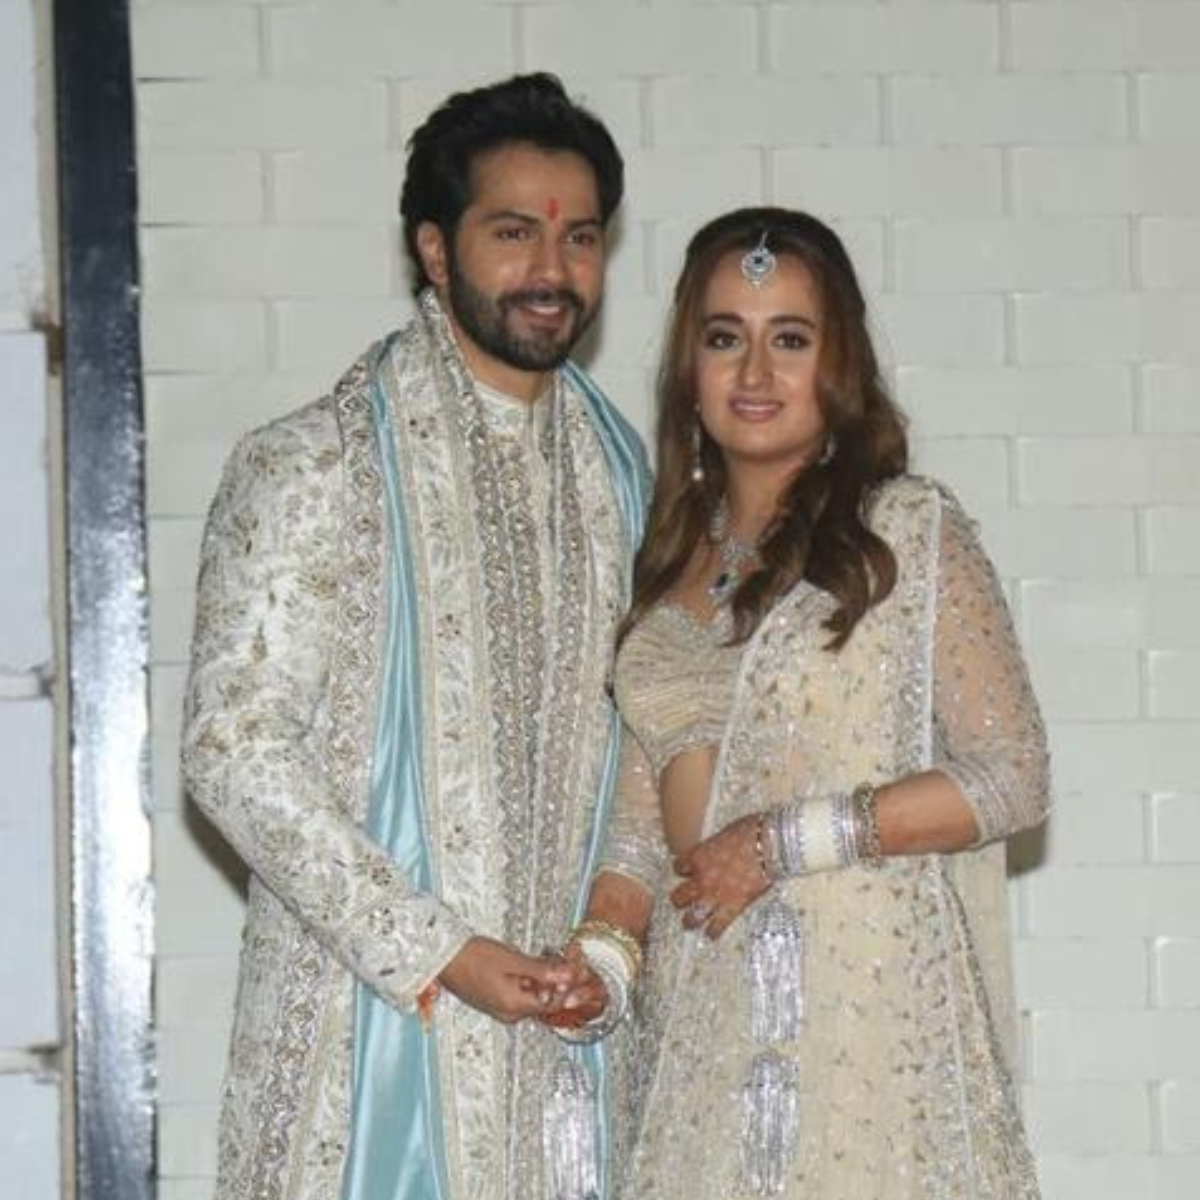 EXCLUSIVE: No wedding reception for Varun Dhawan and Natasha Dalal planned on February 2, confirms Anil Dhawan